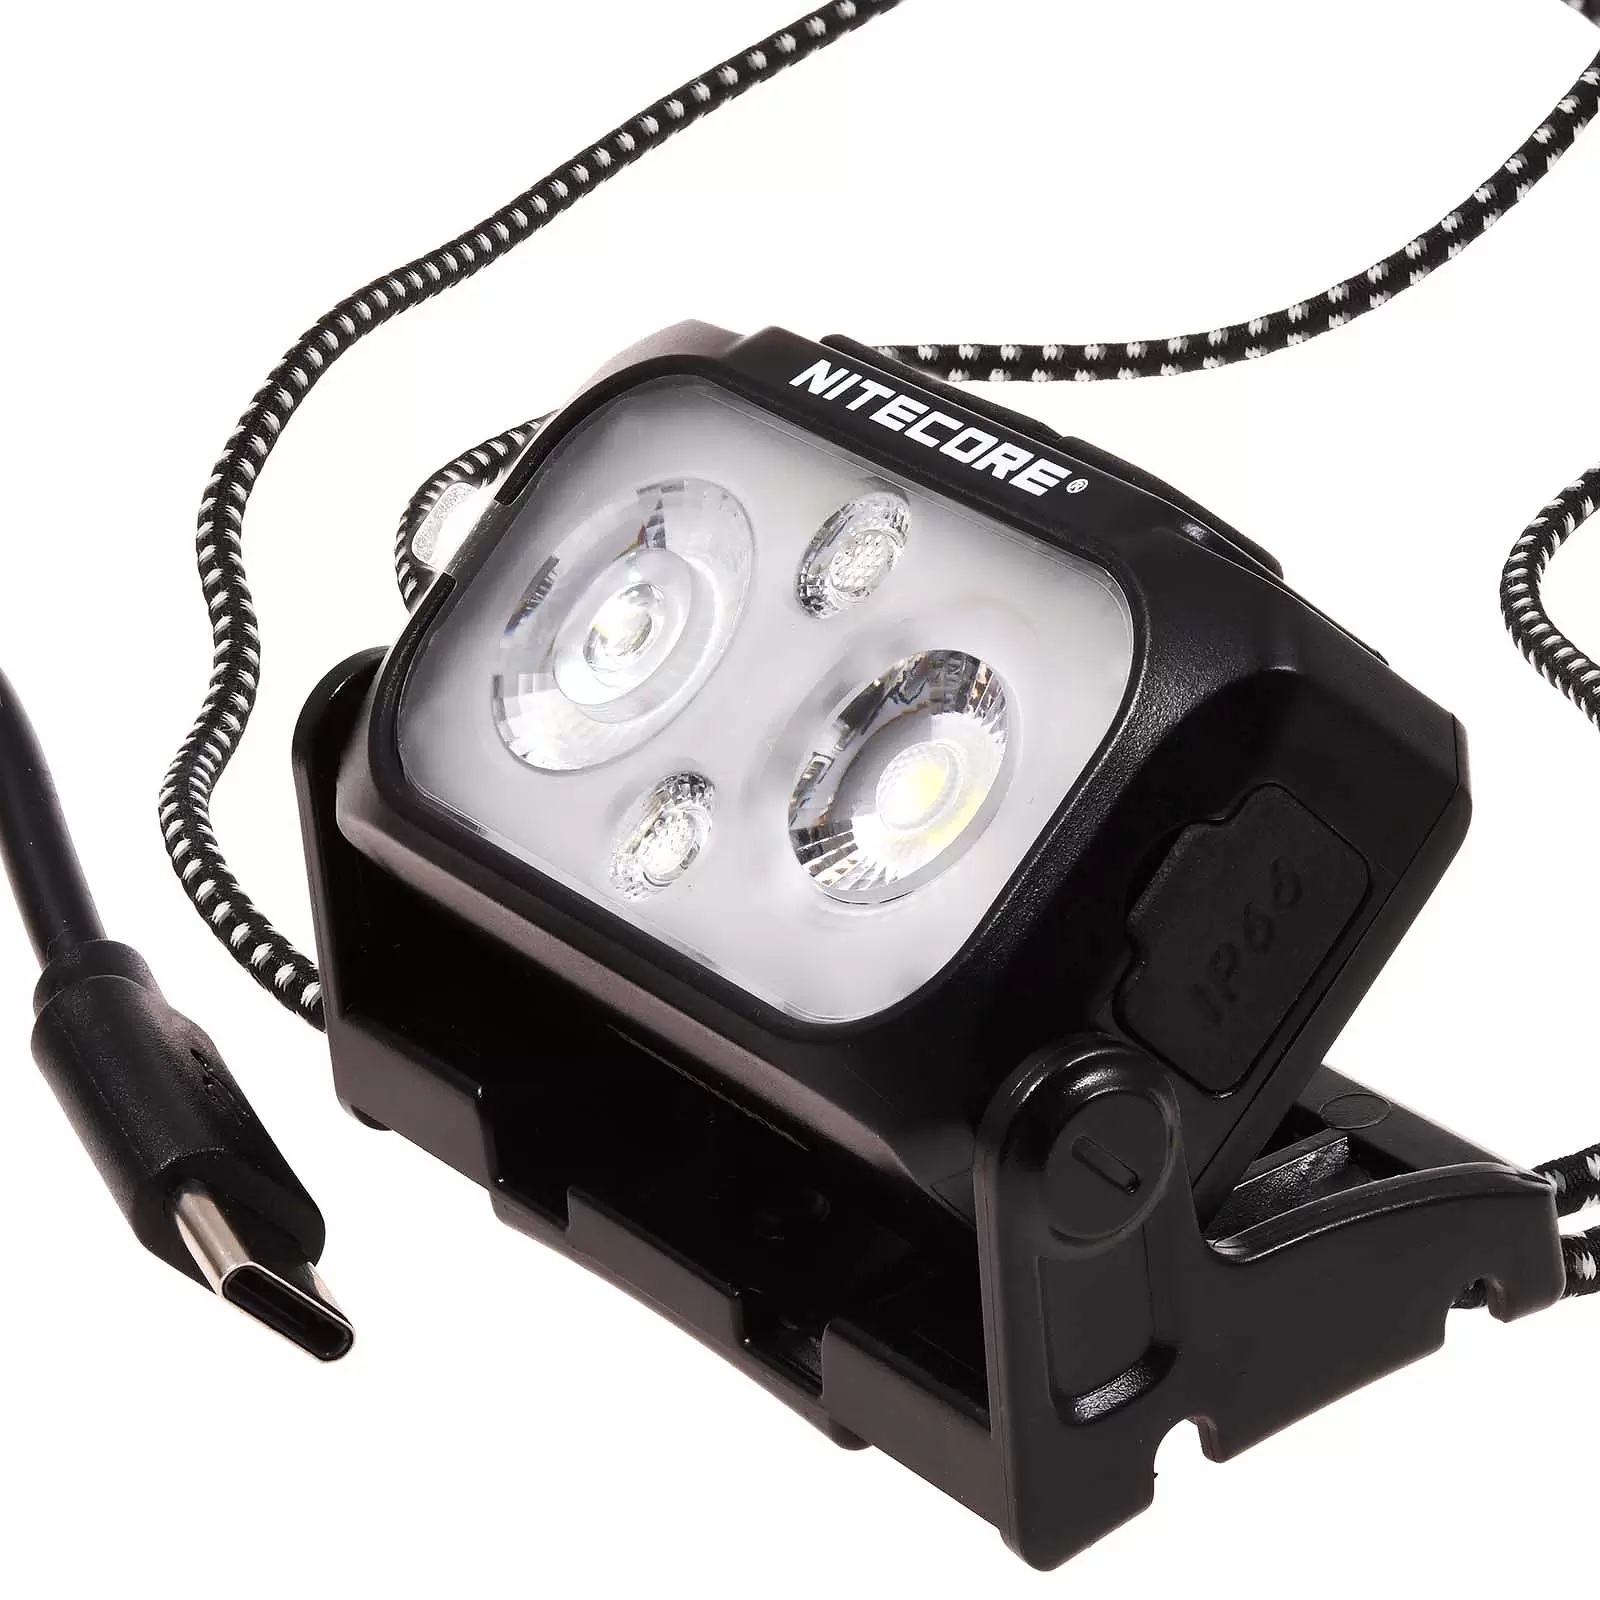 Nitecore NU21 LED Kopflampe, Stirnlampe, Headlamp, USB-C, max. 360 Lumen